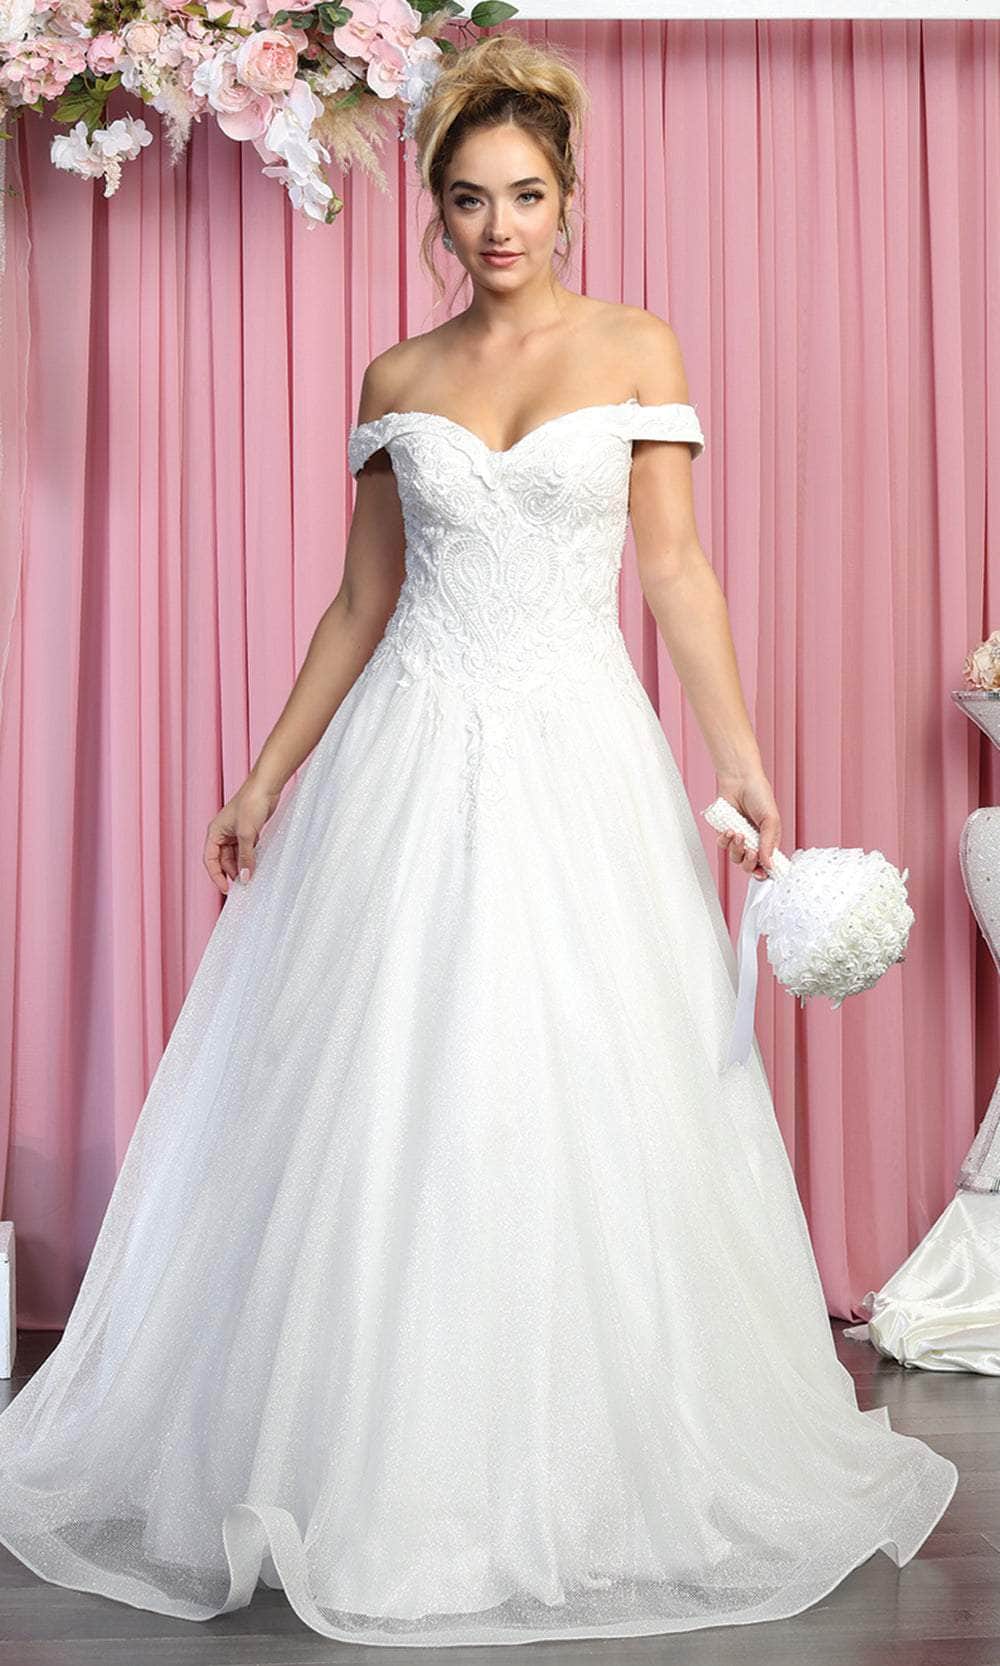 May Queen RQ7898 - Off-shoulder Sweetheart Neckline Wedding Gown Wedding Dresses 4 / Ivory